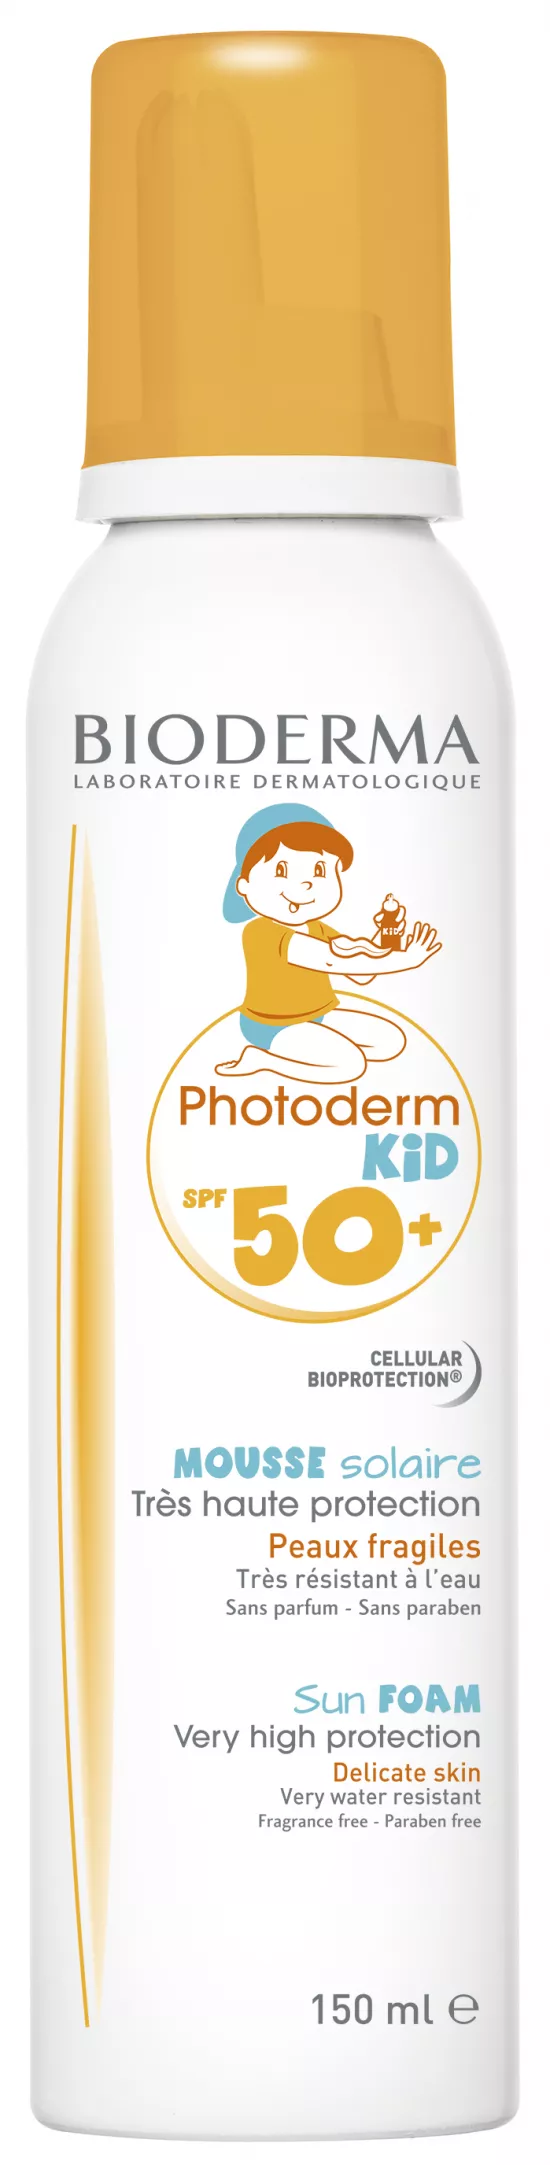 BIODERMA Photoderm Kid Spuma SPF 50+ * 150 ml